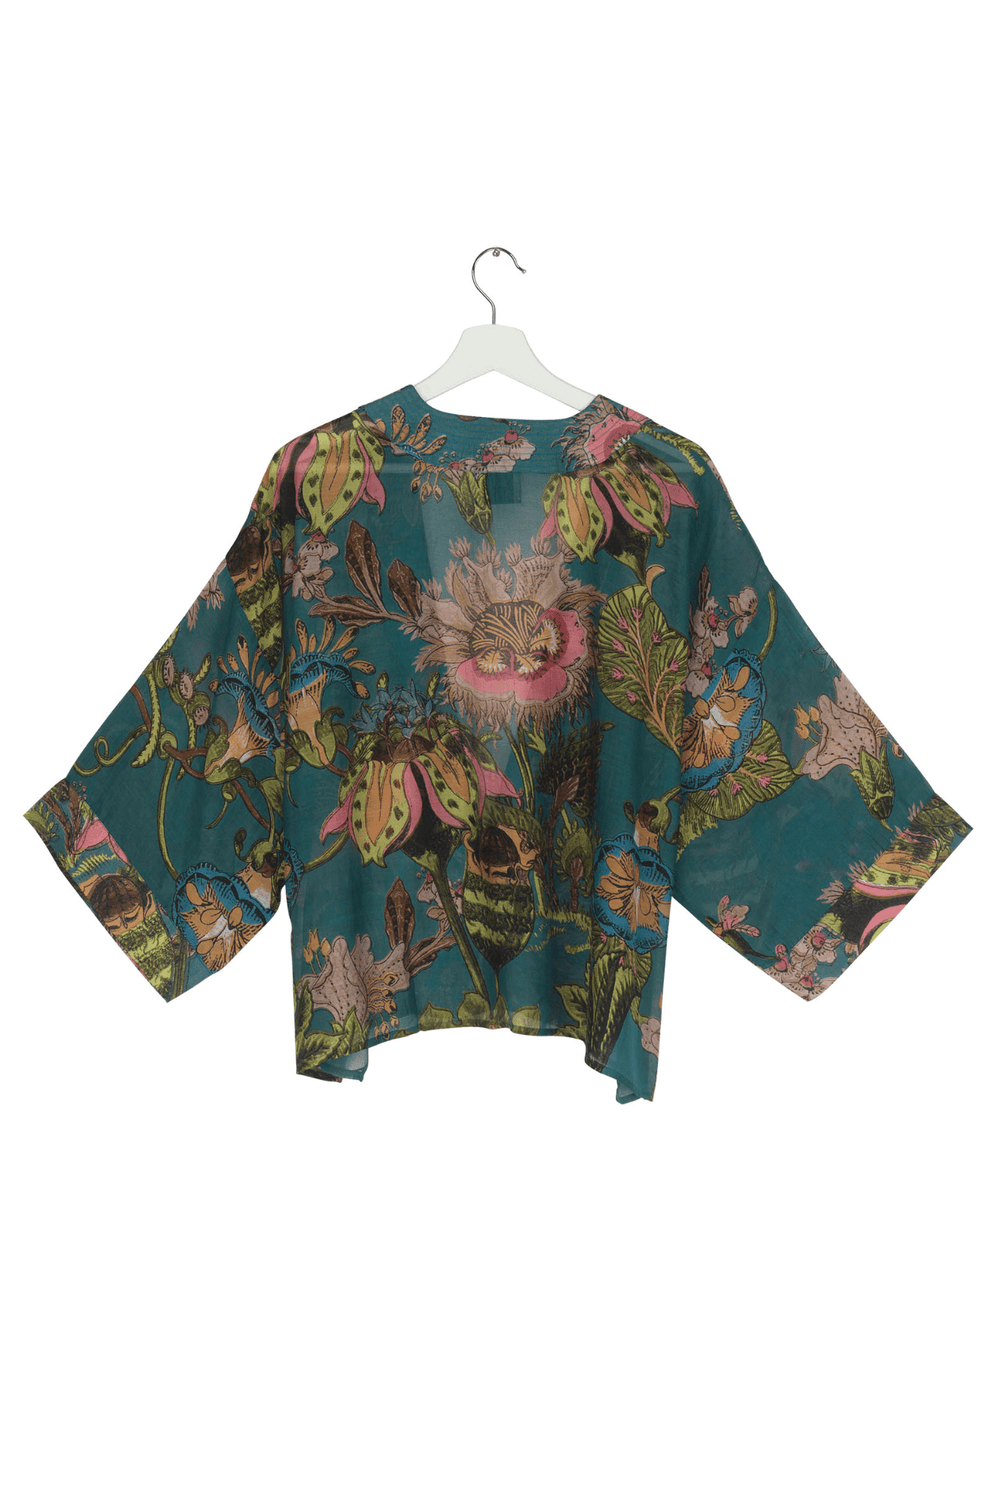 Eccentric Blooms Teal Kimono - One Hundred Stars